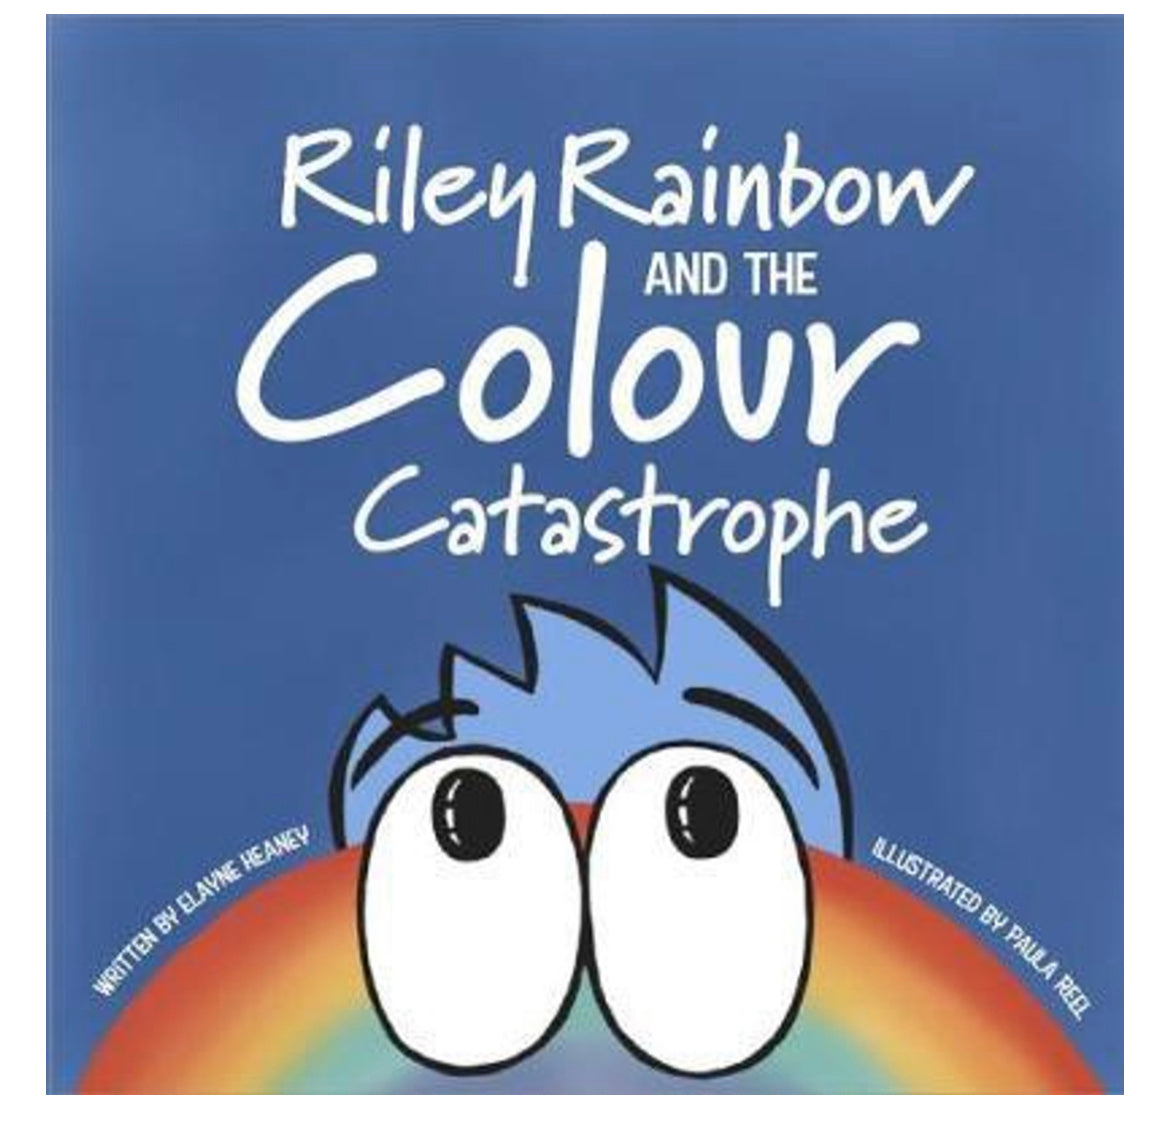 Riley rainbow and the Colour Catastrophe Irish kids book